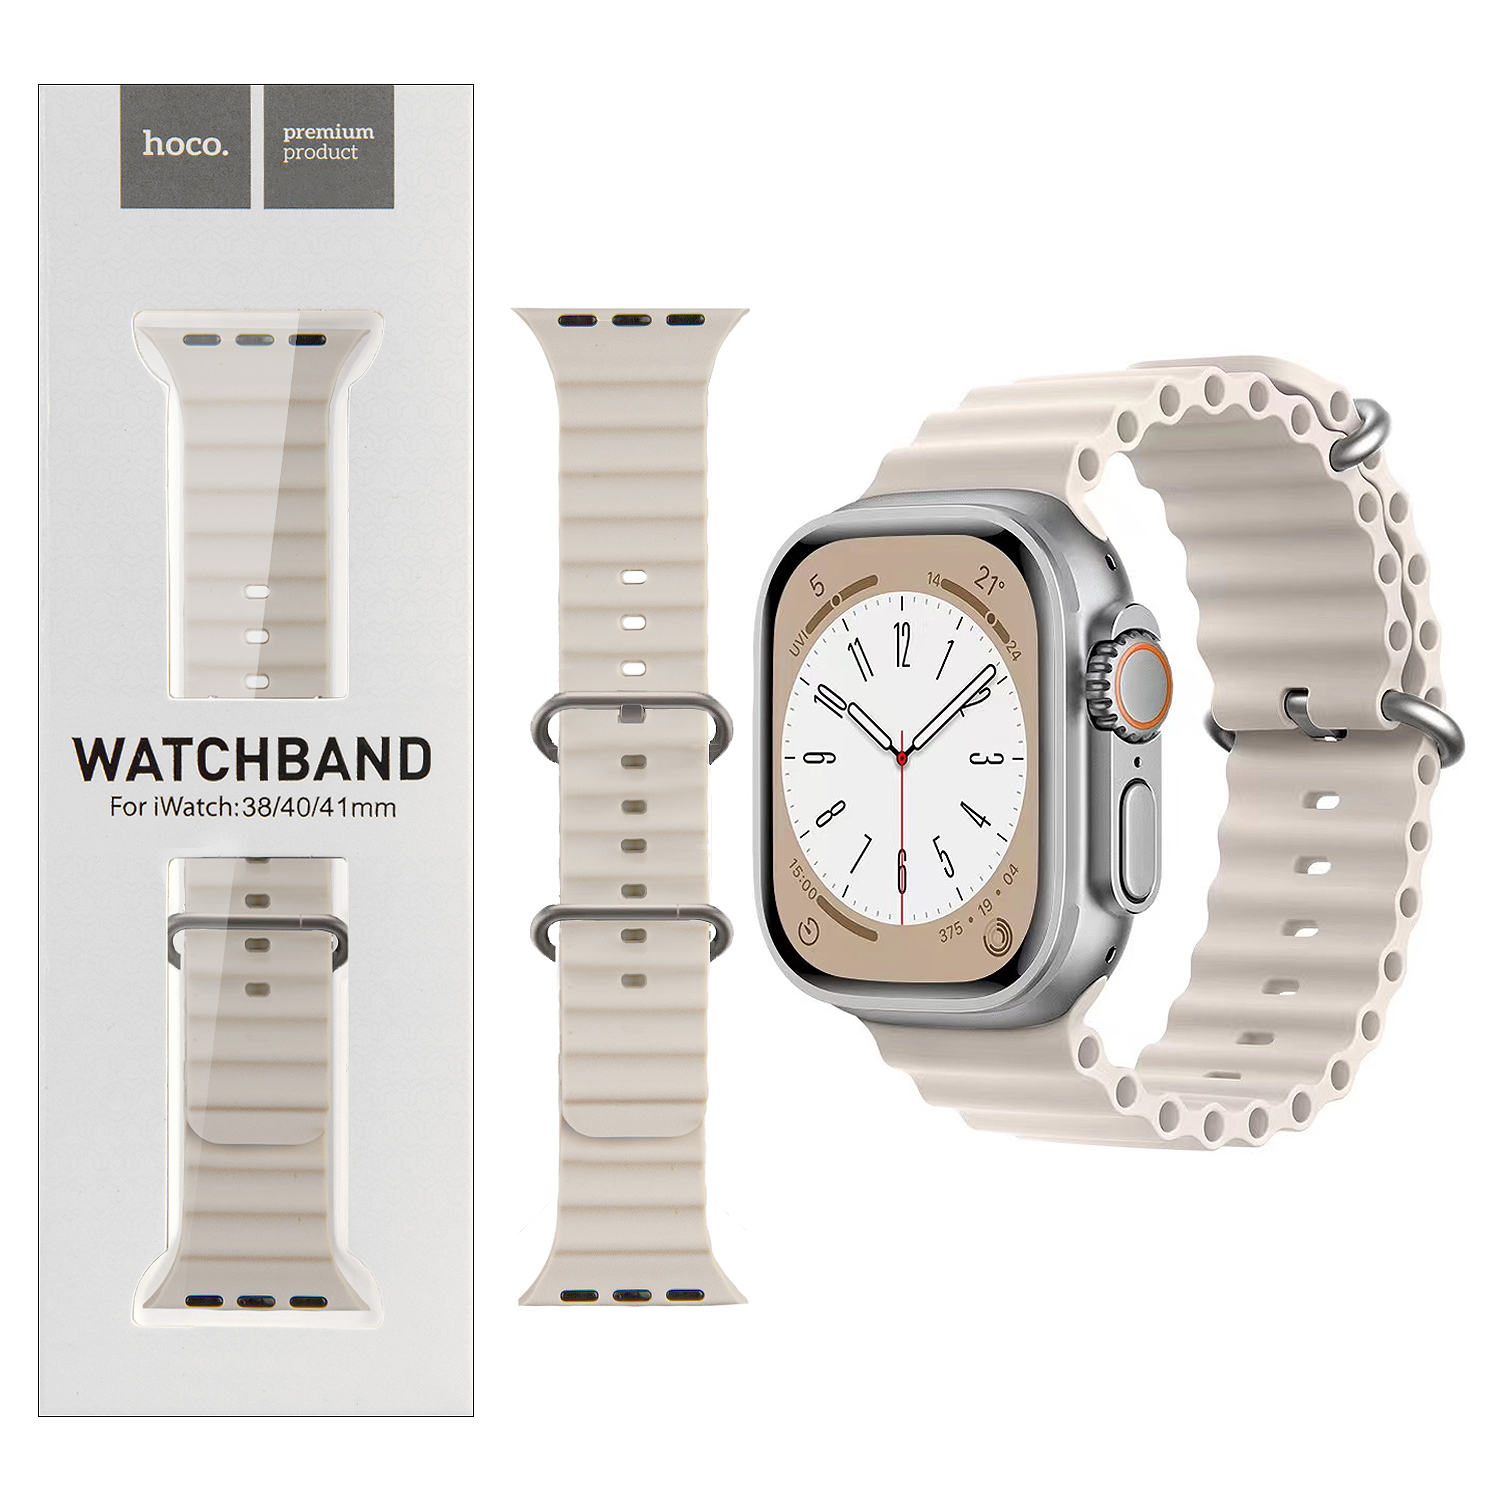 Ремешок для Apl watch 38/40/41mm Watchband WA12 Or. series marine double star color HOCO